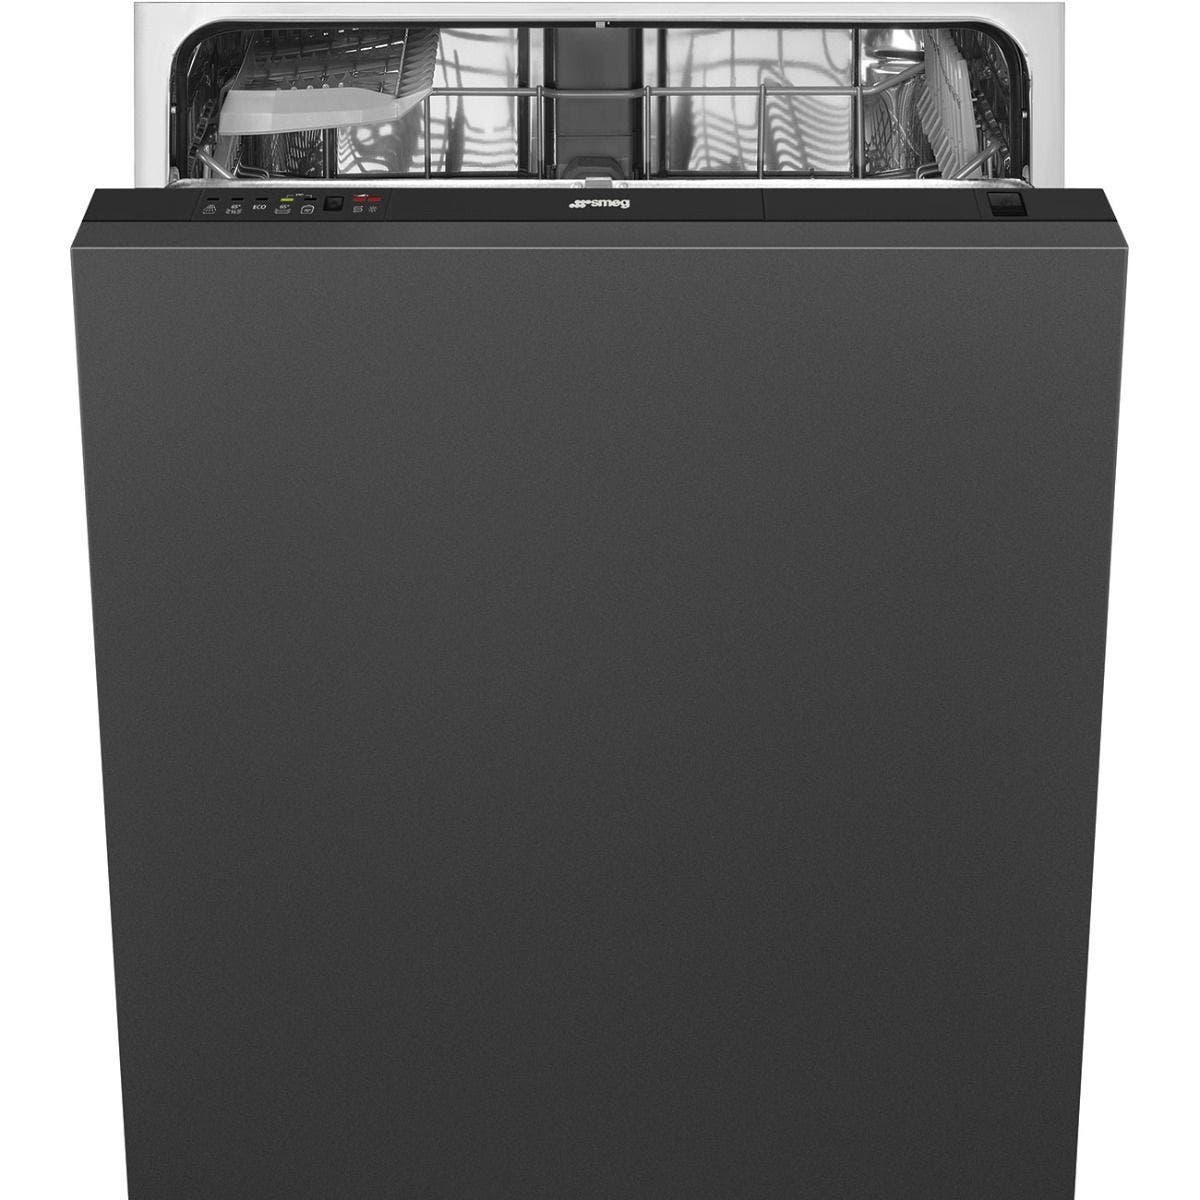 SMEG 60cm integrated Dishwasher